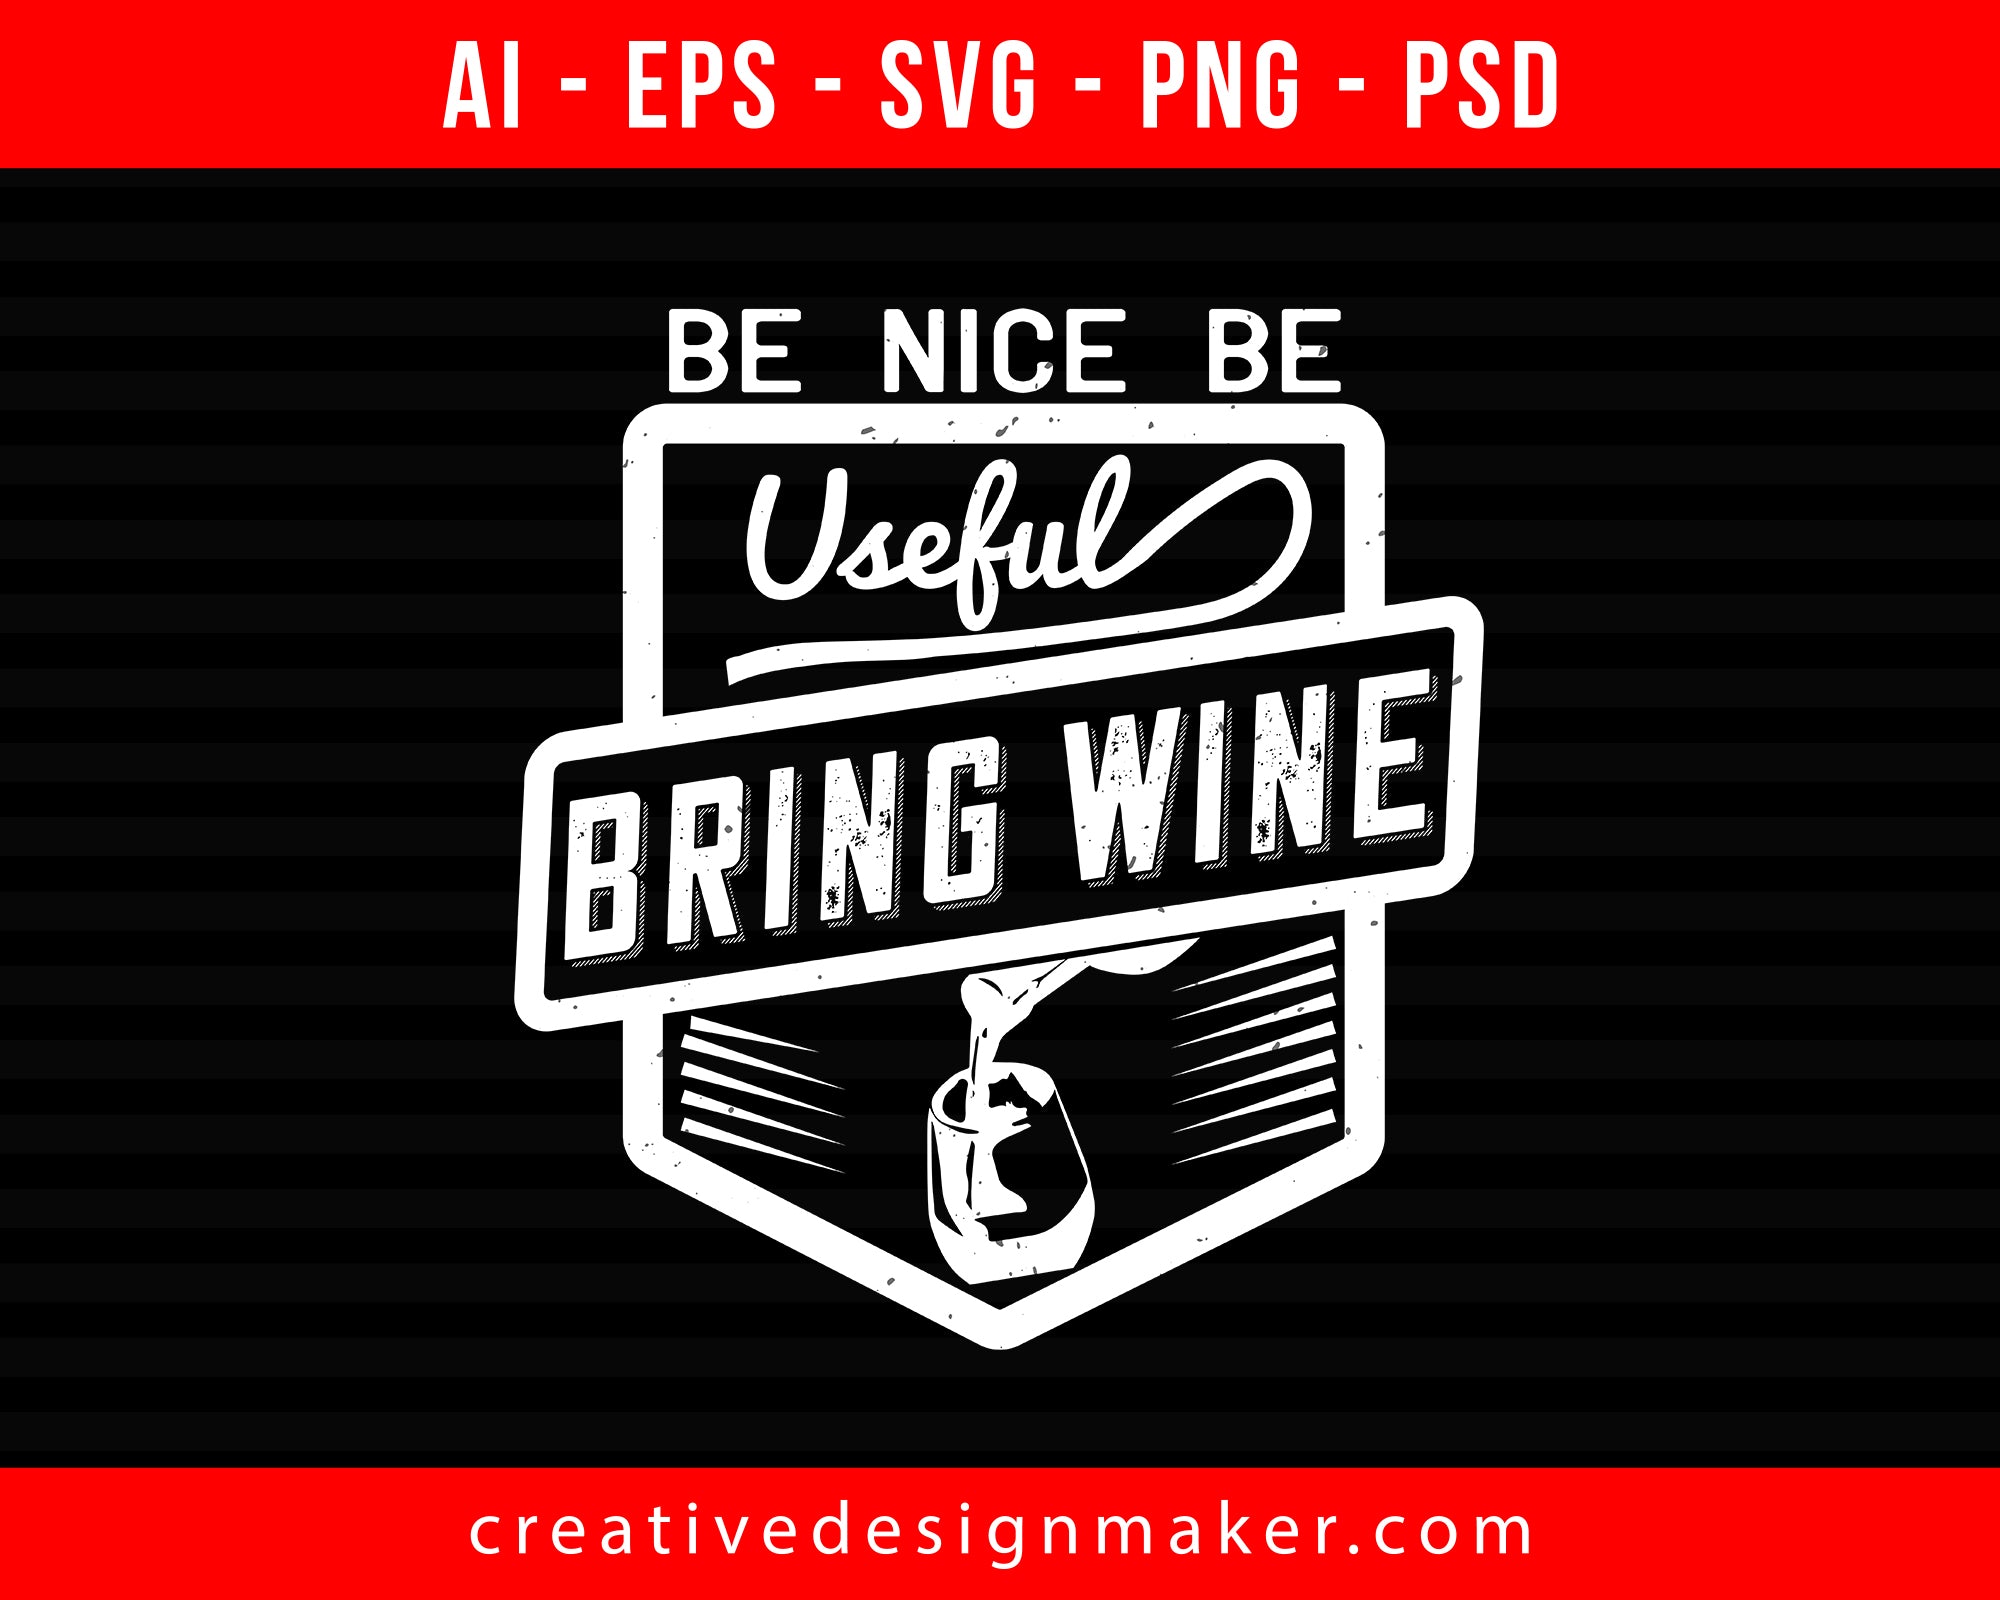 Be nice be useful bring Wine Print Ready Editable T-Shirt SVG Design!